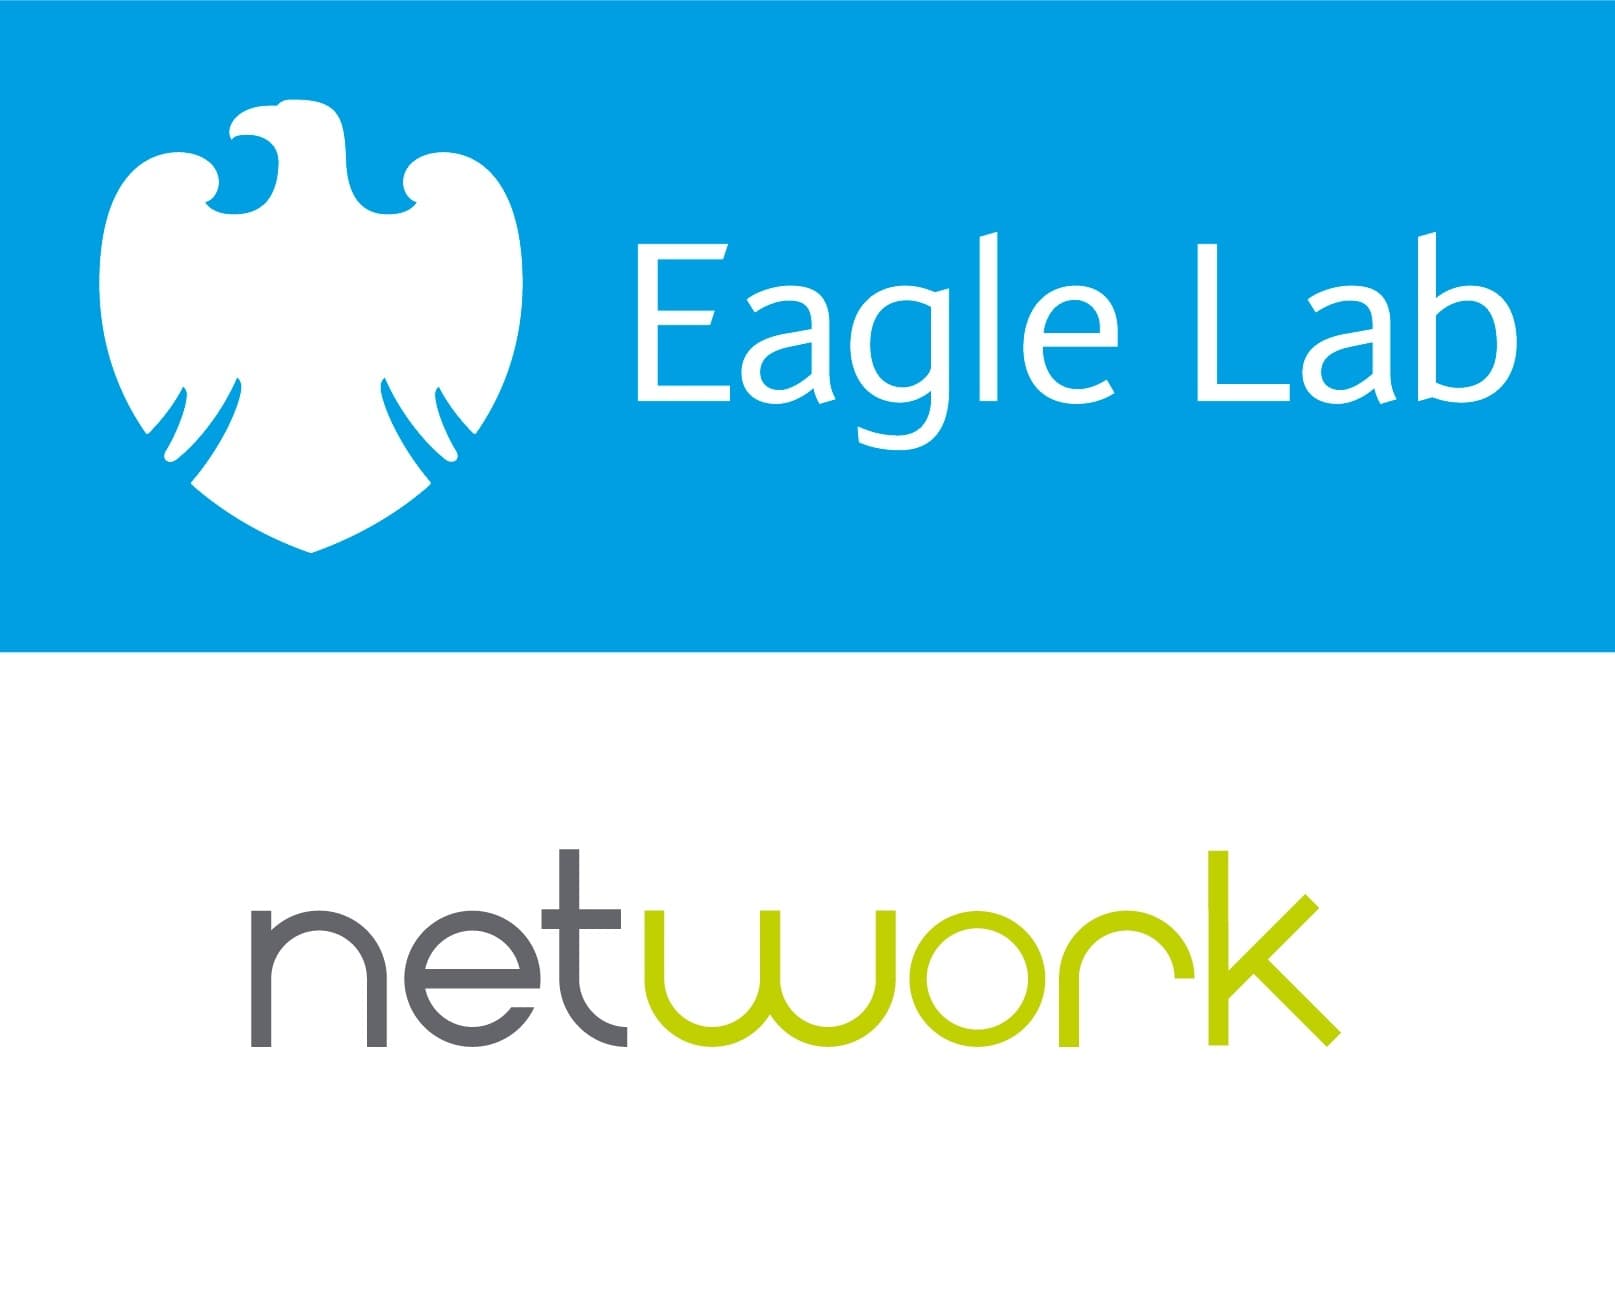 Network Eagle Lab